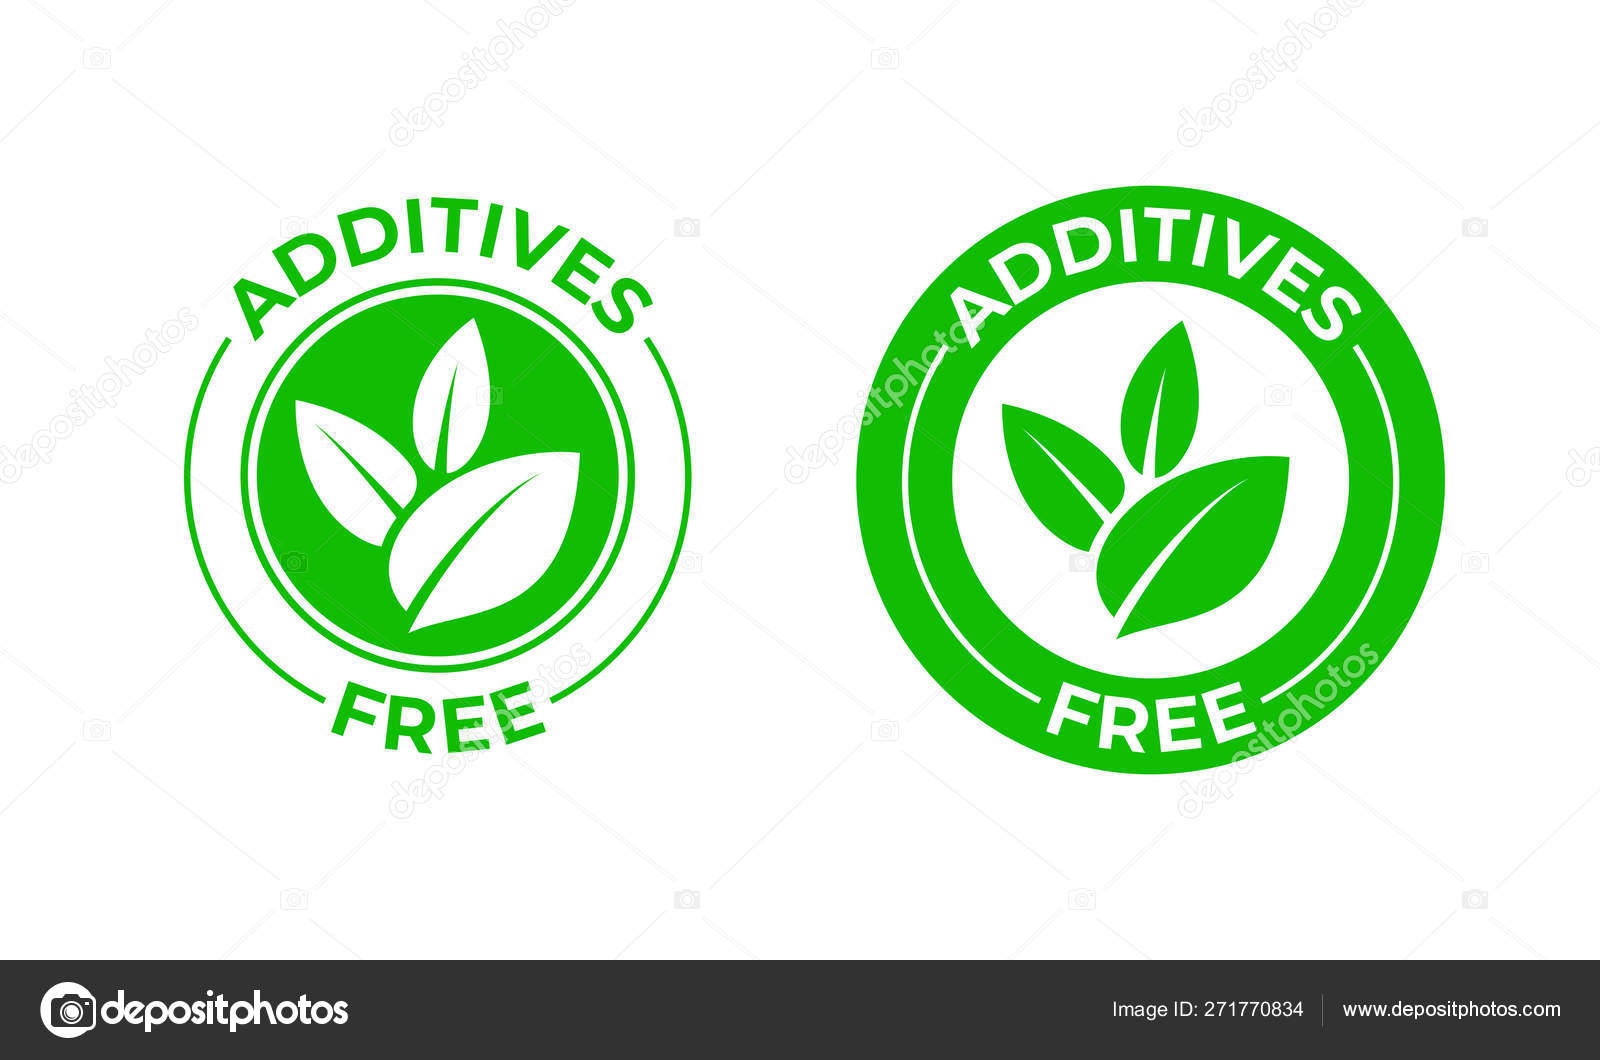 https://st4.depositphotos.com/16835446/27177/v/1600/depositphotos_271770834-stock-illustration-additives-free-vector-green-organic.jpg